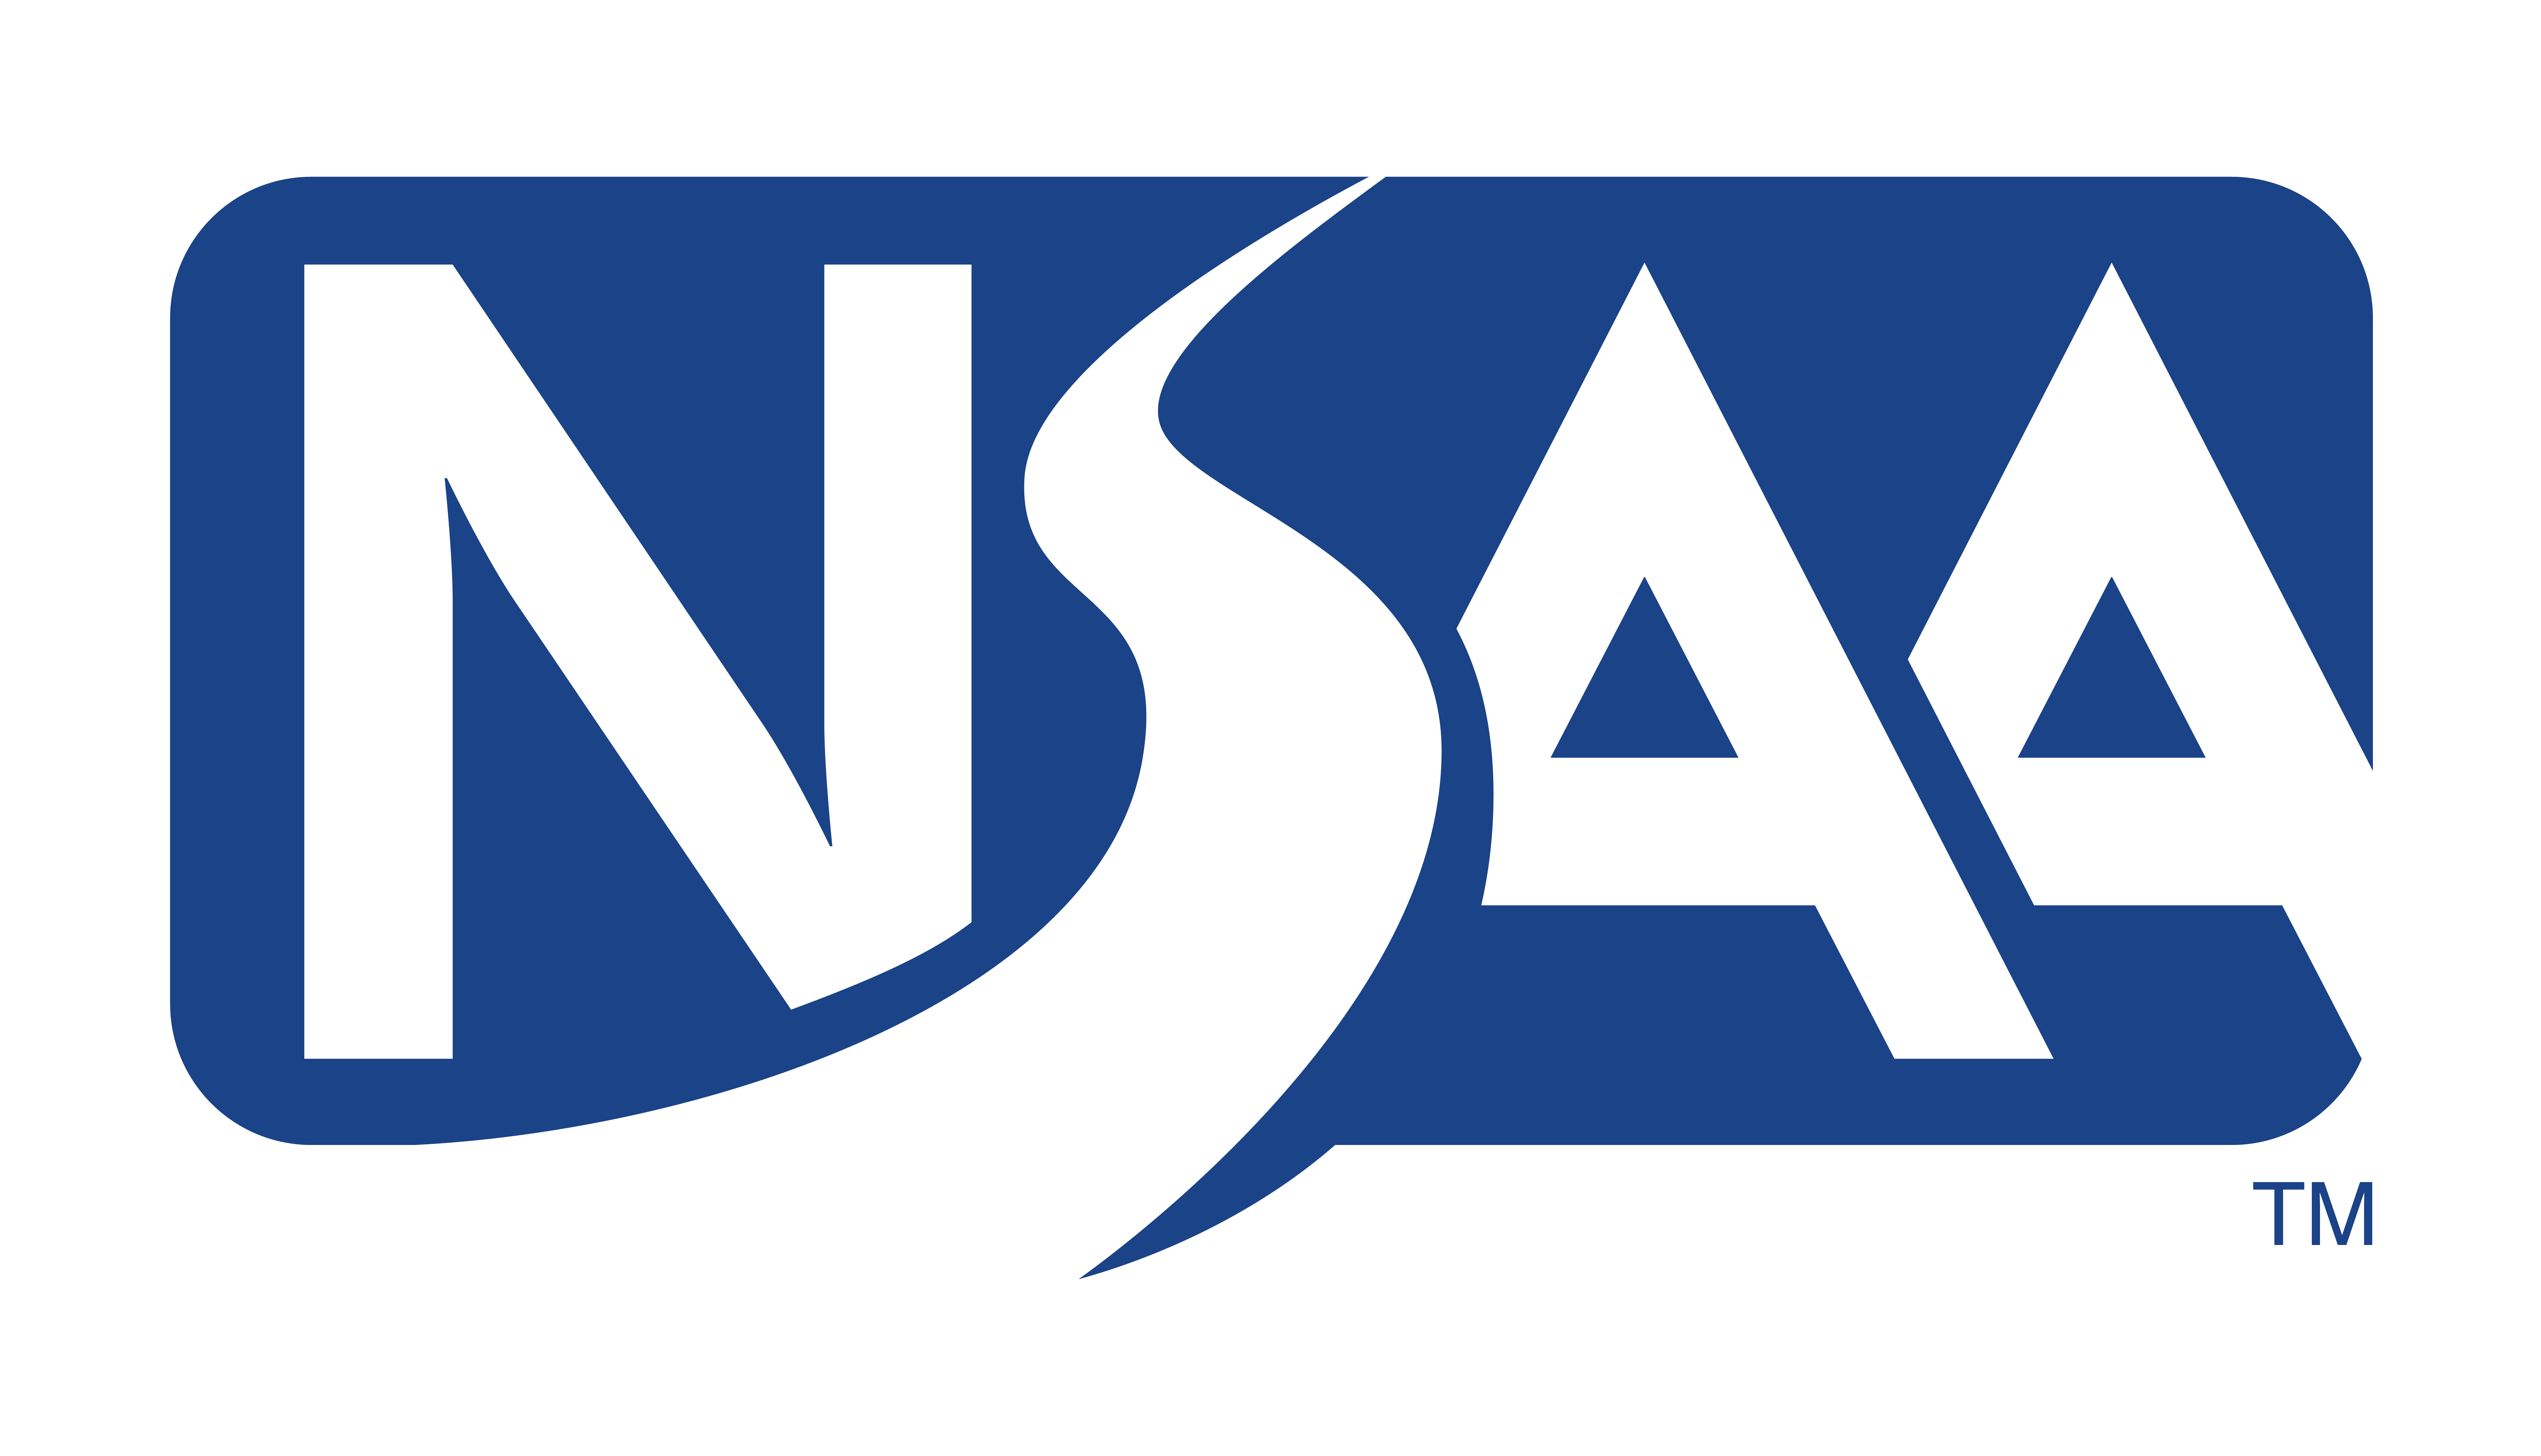 NSAA logo